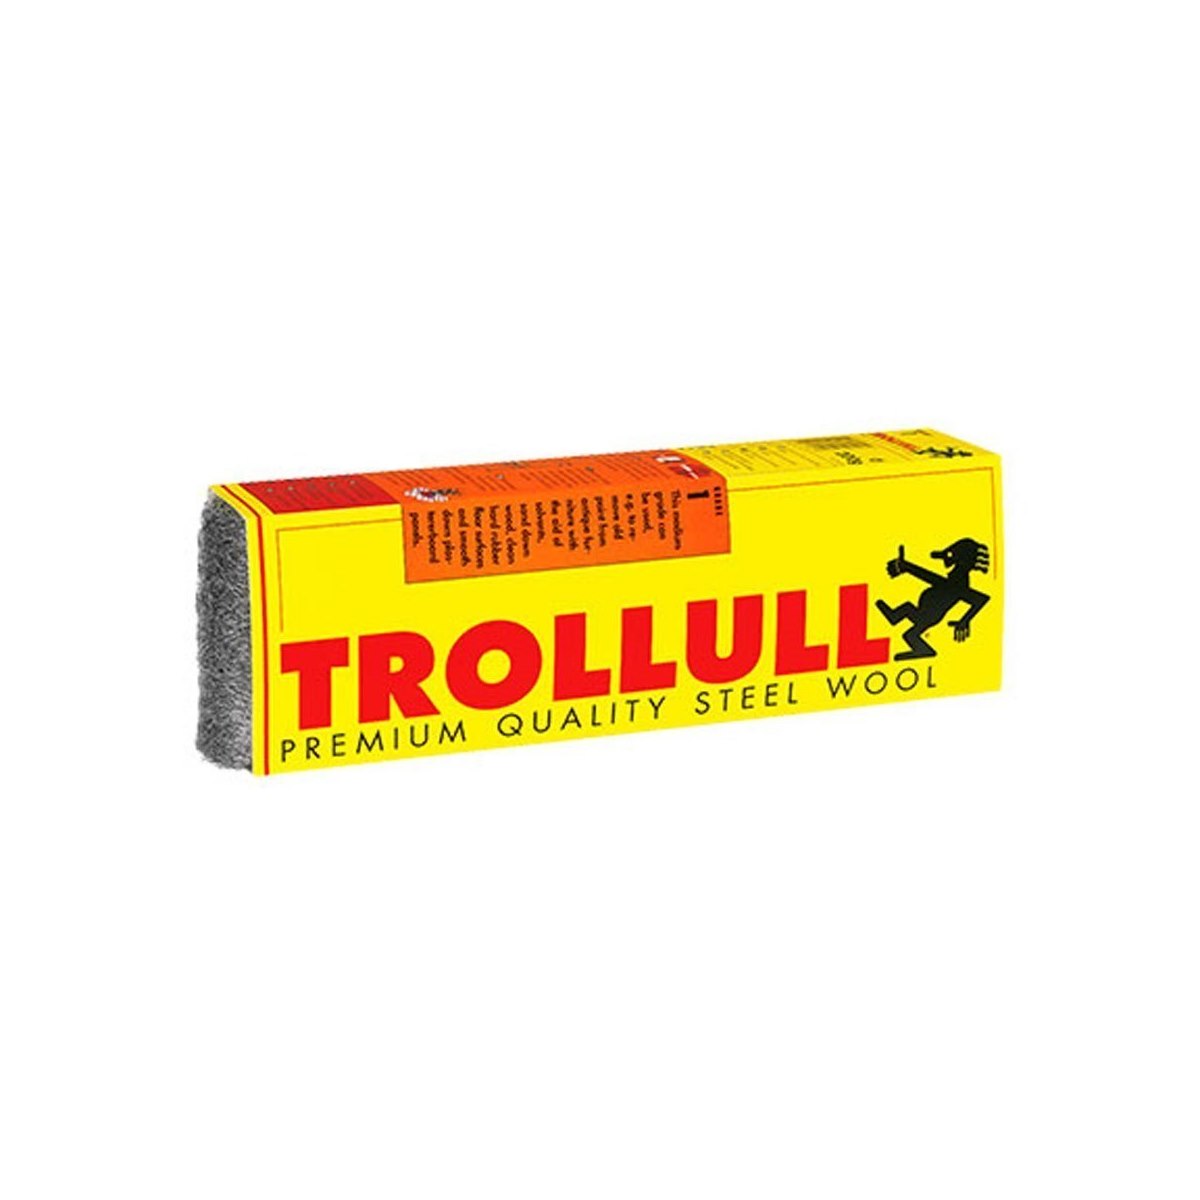 Trollull Steel Wool 200g Sleeve 1